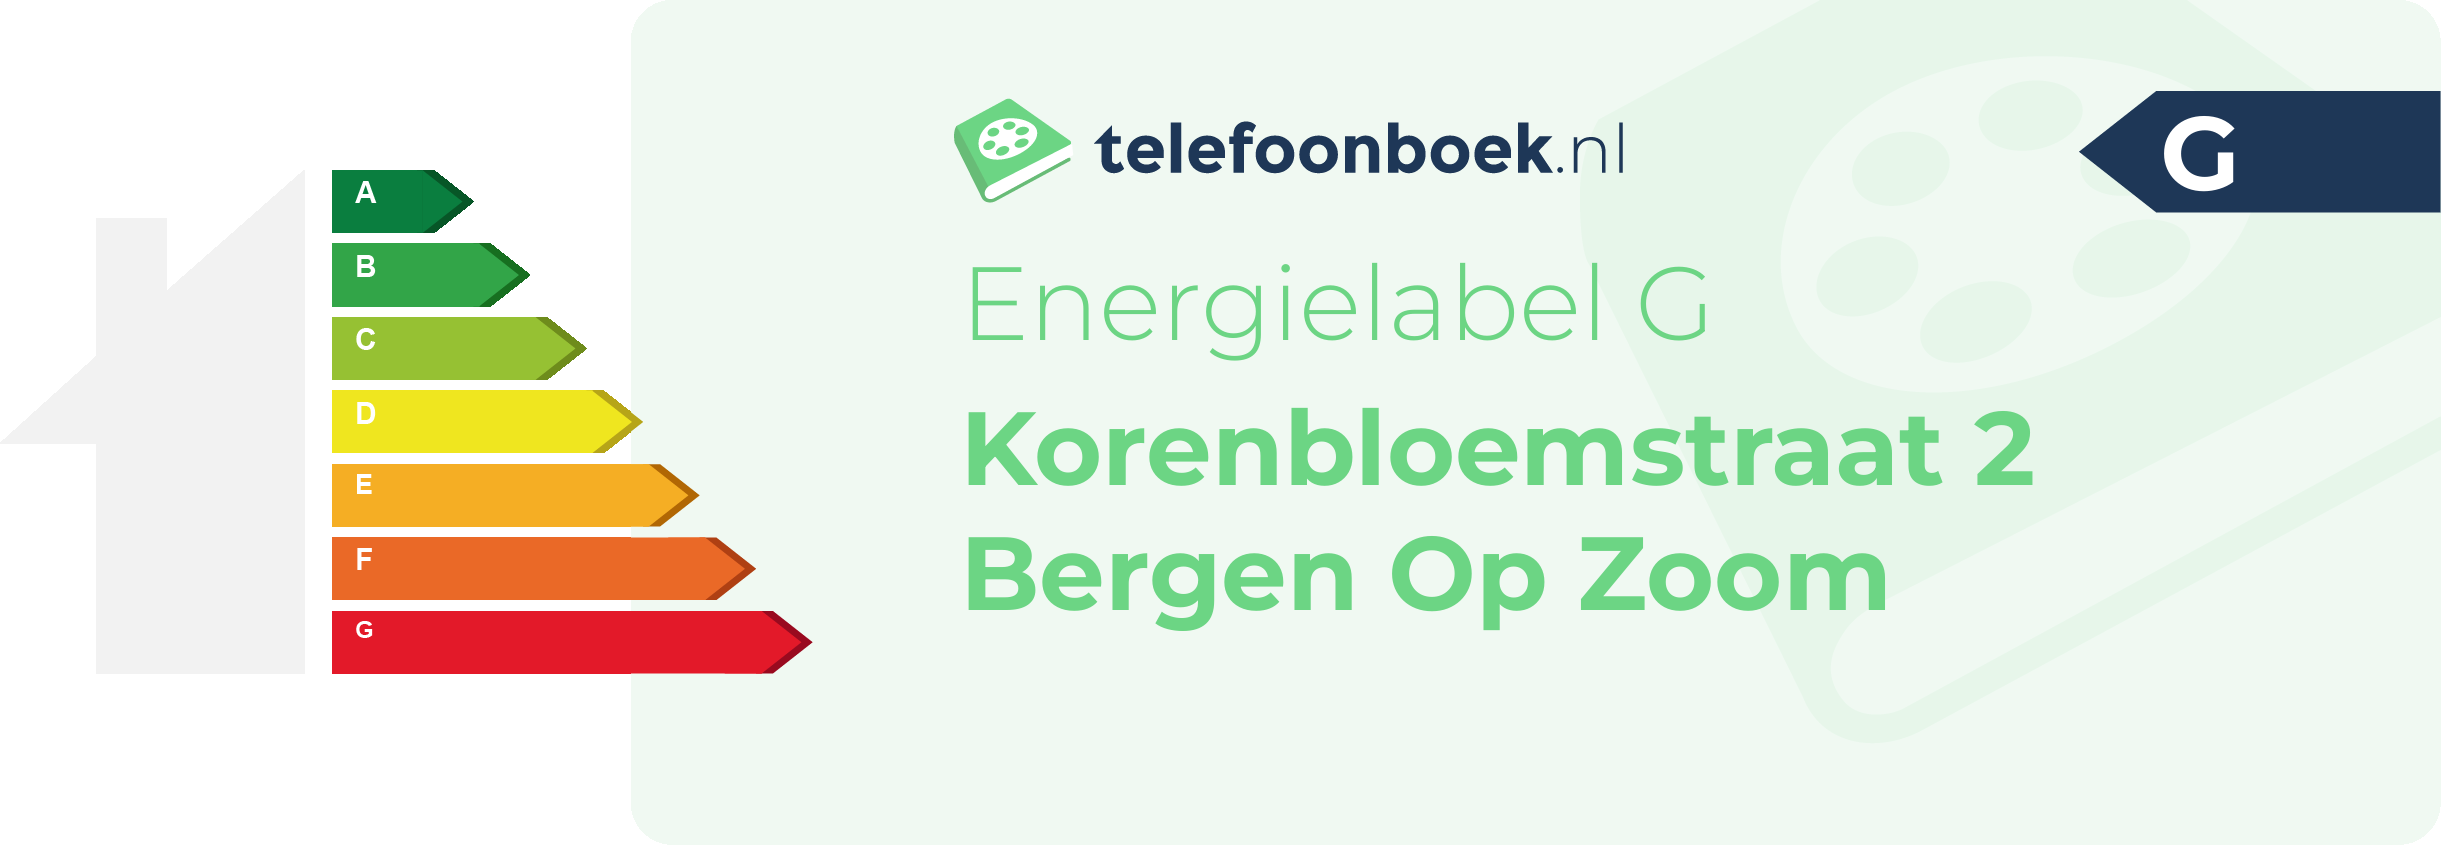 Energielabel Korenbloemstraat 2 Bergen Op Zoom